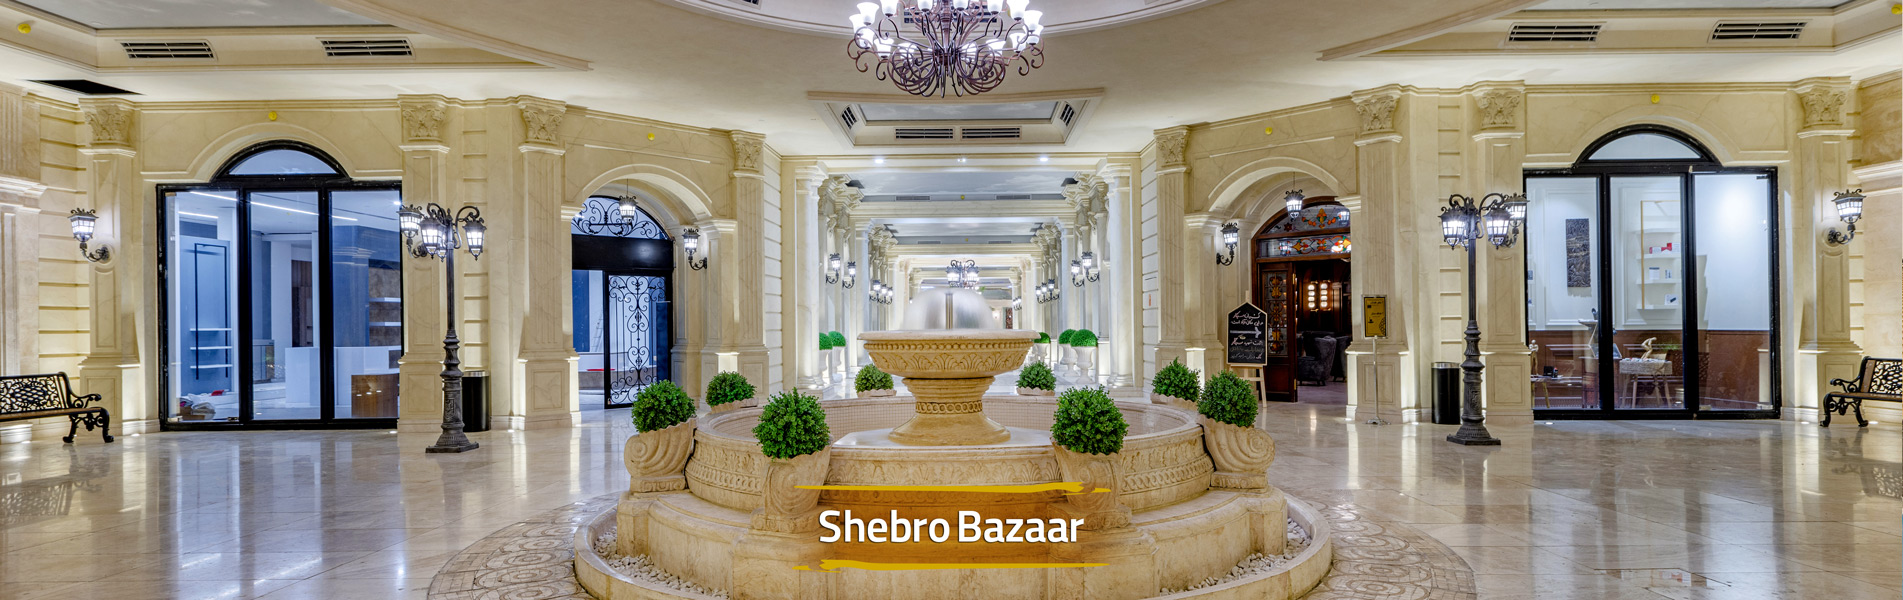 Shebro Bazaar